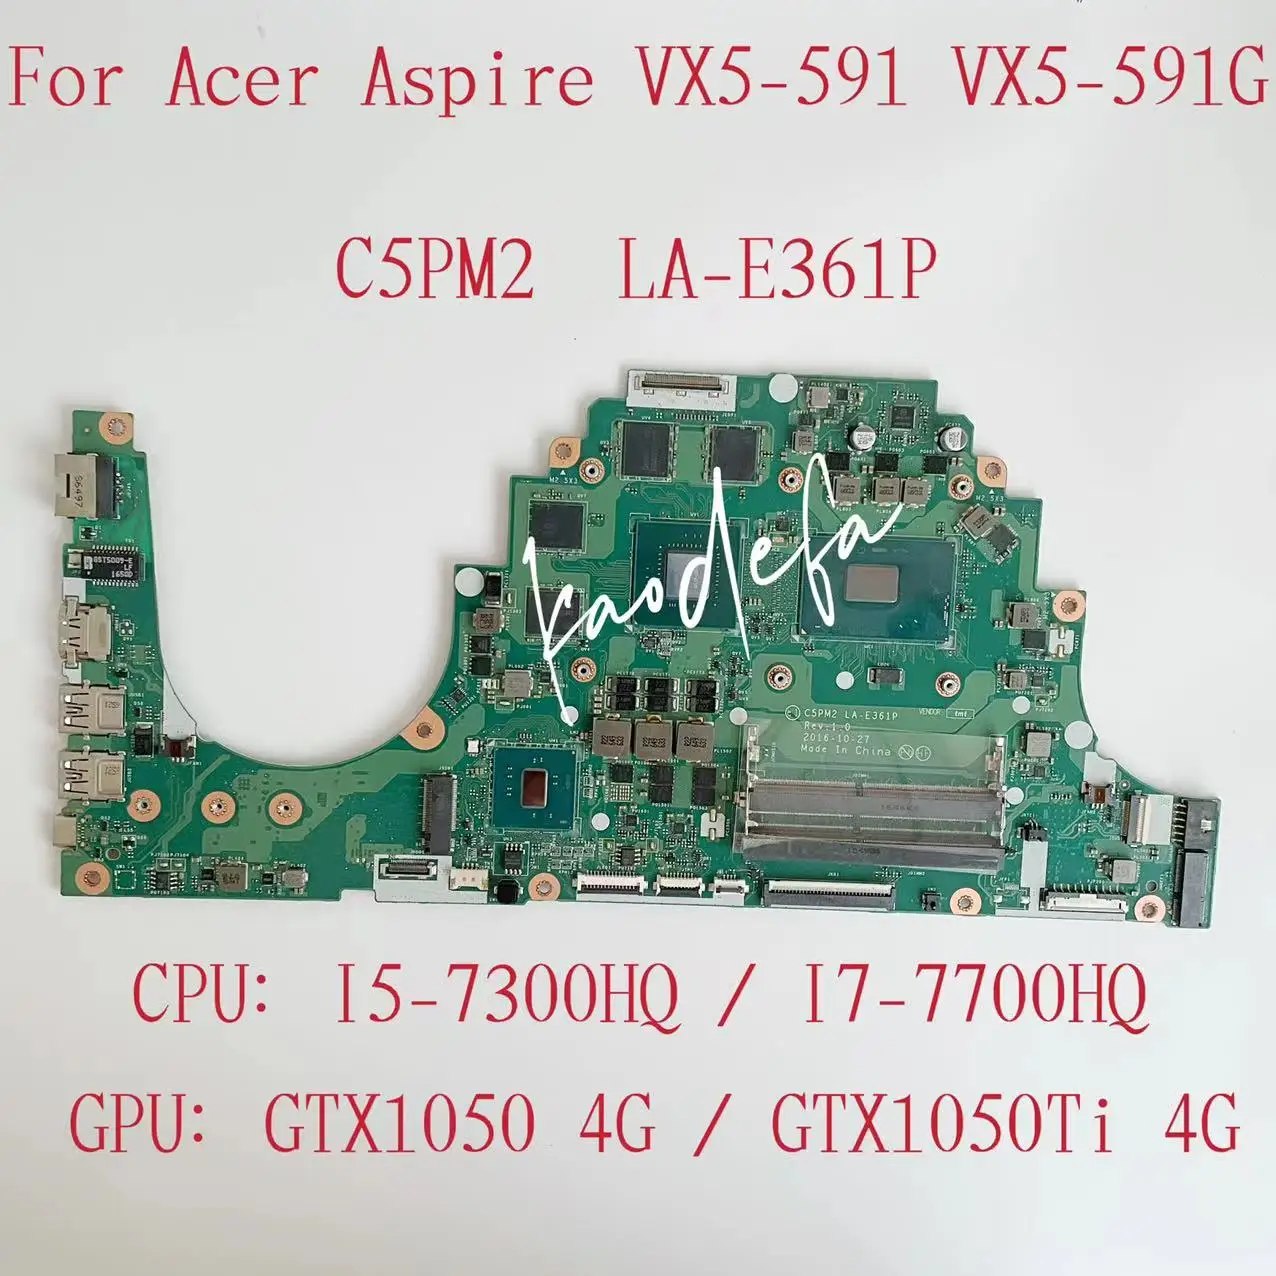 C5PM2 LA-E361P Mainboard voor Acer Aspire VX5-591 Laptop Motermoederbord CPU I5-7300HQ / I7-7700HQ GPU: GTX1050 / 1050TI 4G Test OK